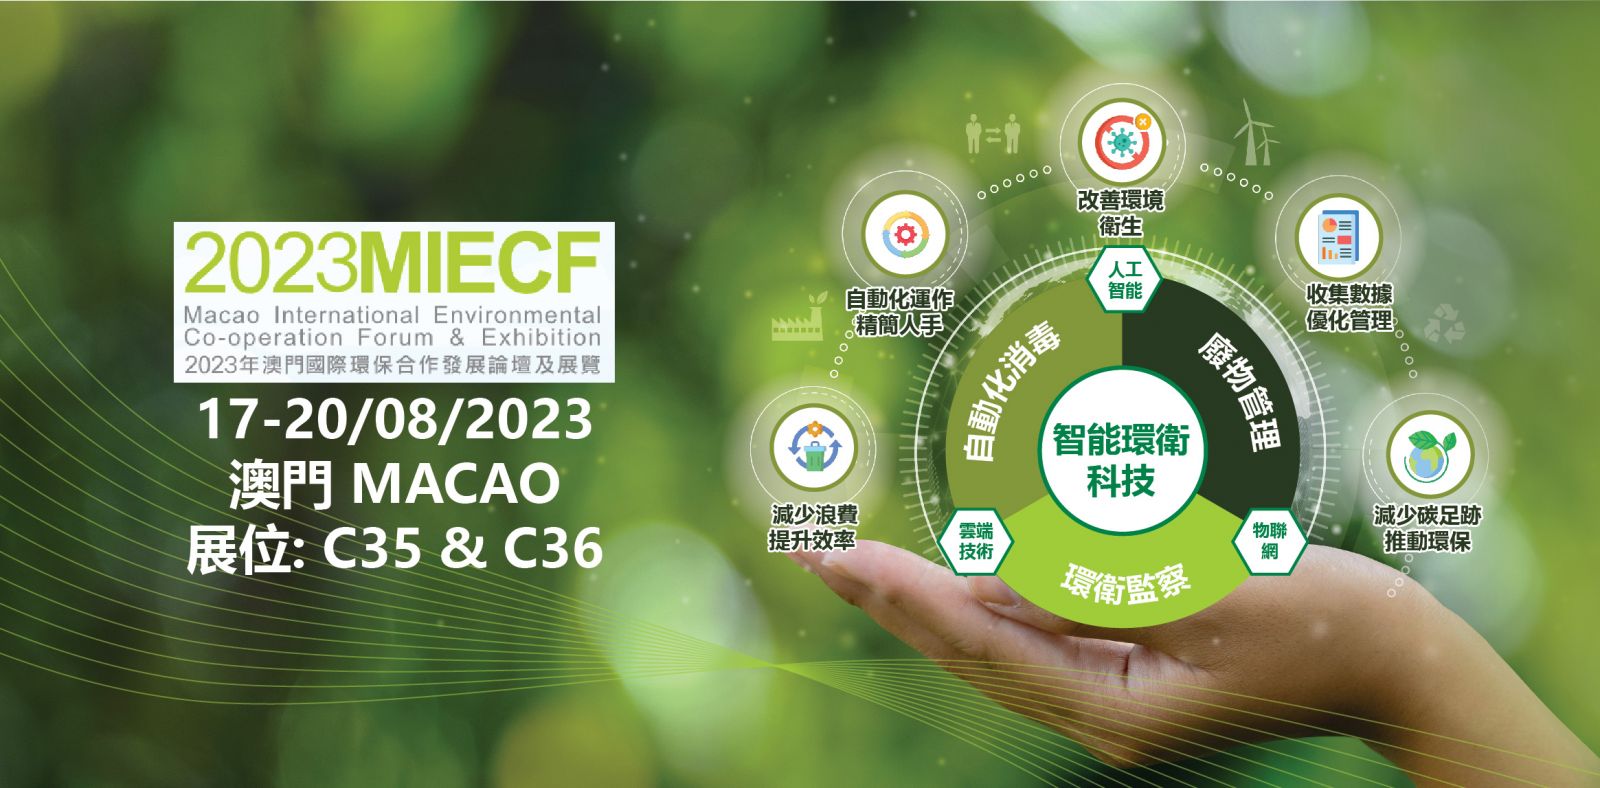 Guardforce Macau Joining Annual Eco-Show 2023 MIECF | Guardforce macau